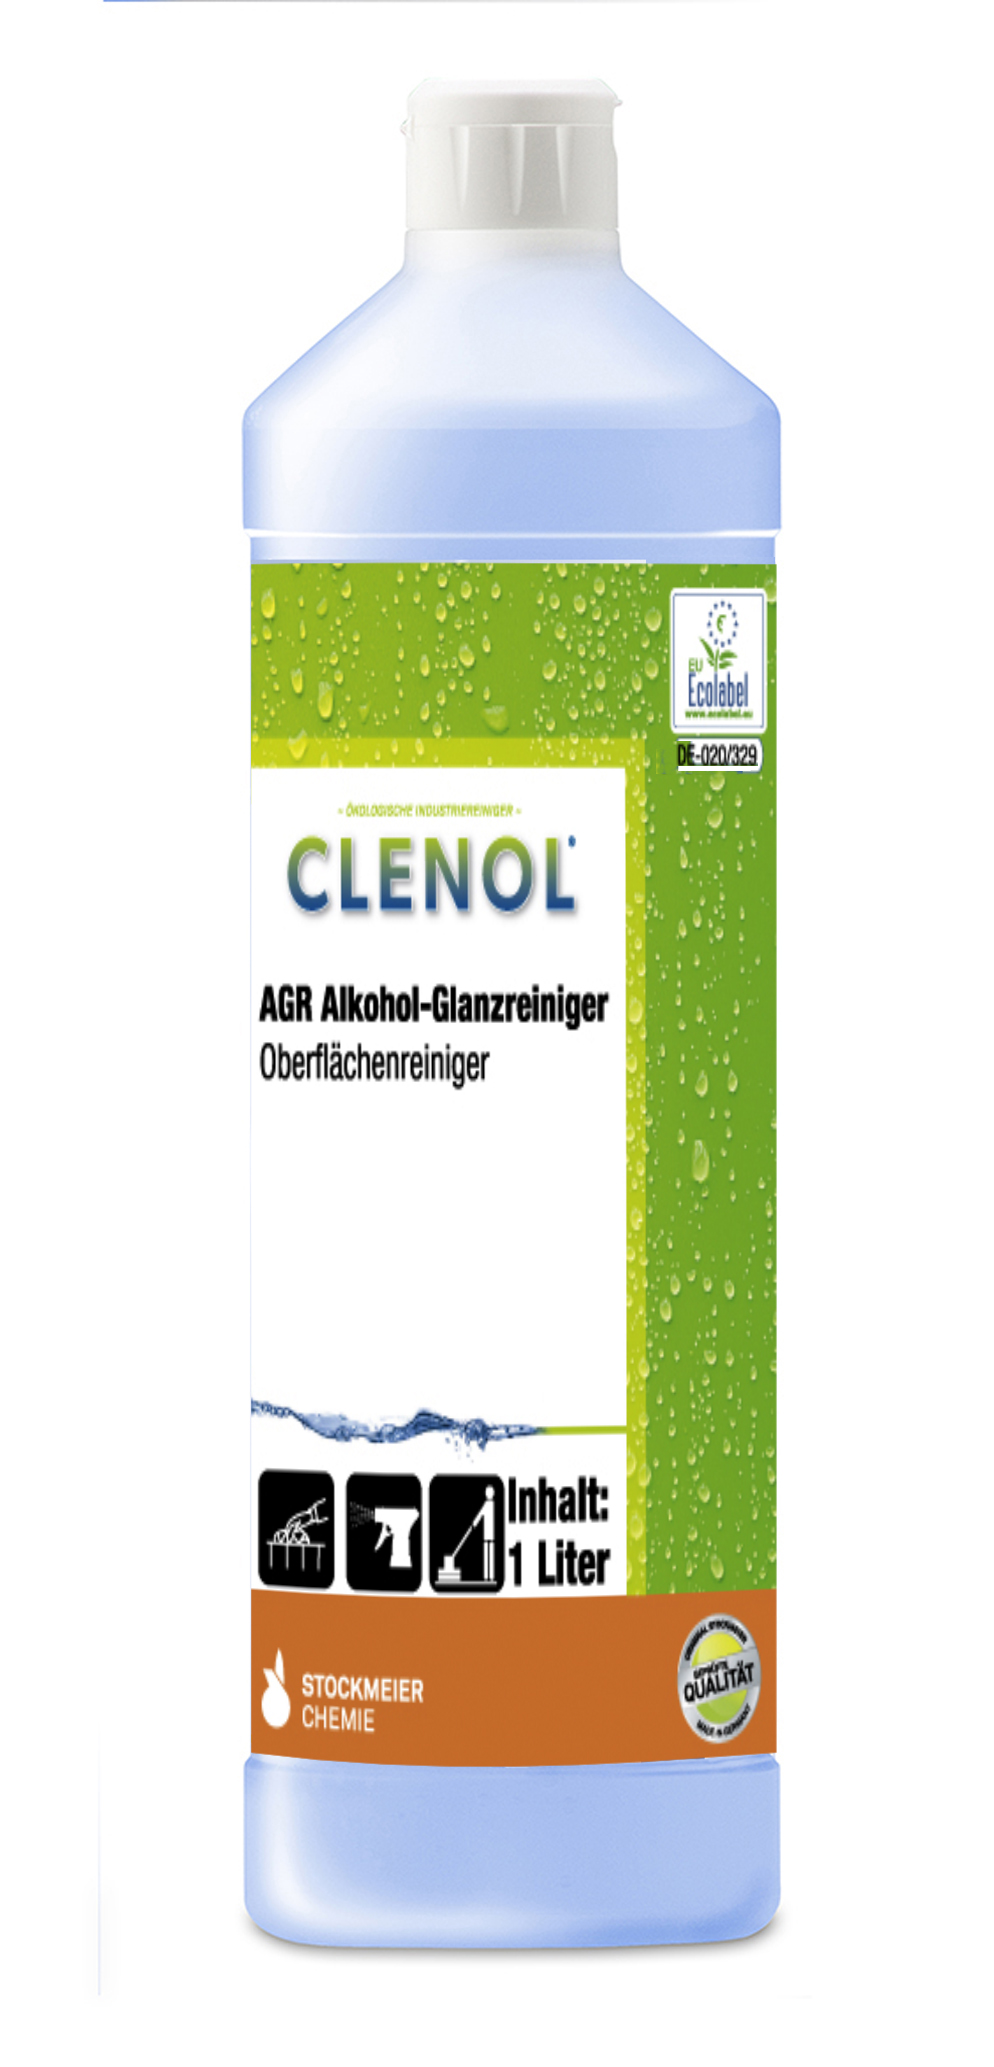 CLENOL AGR Alkohol-Glanzreiniger